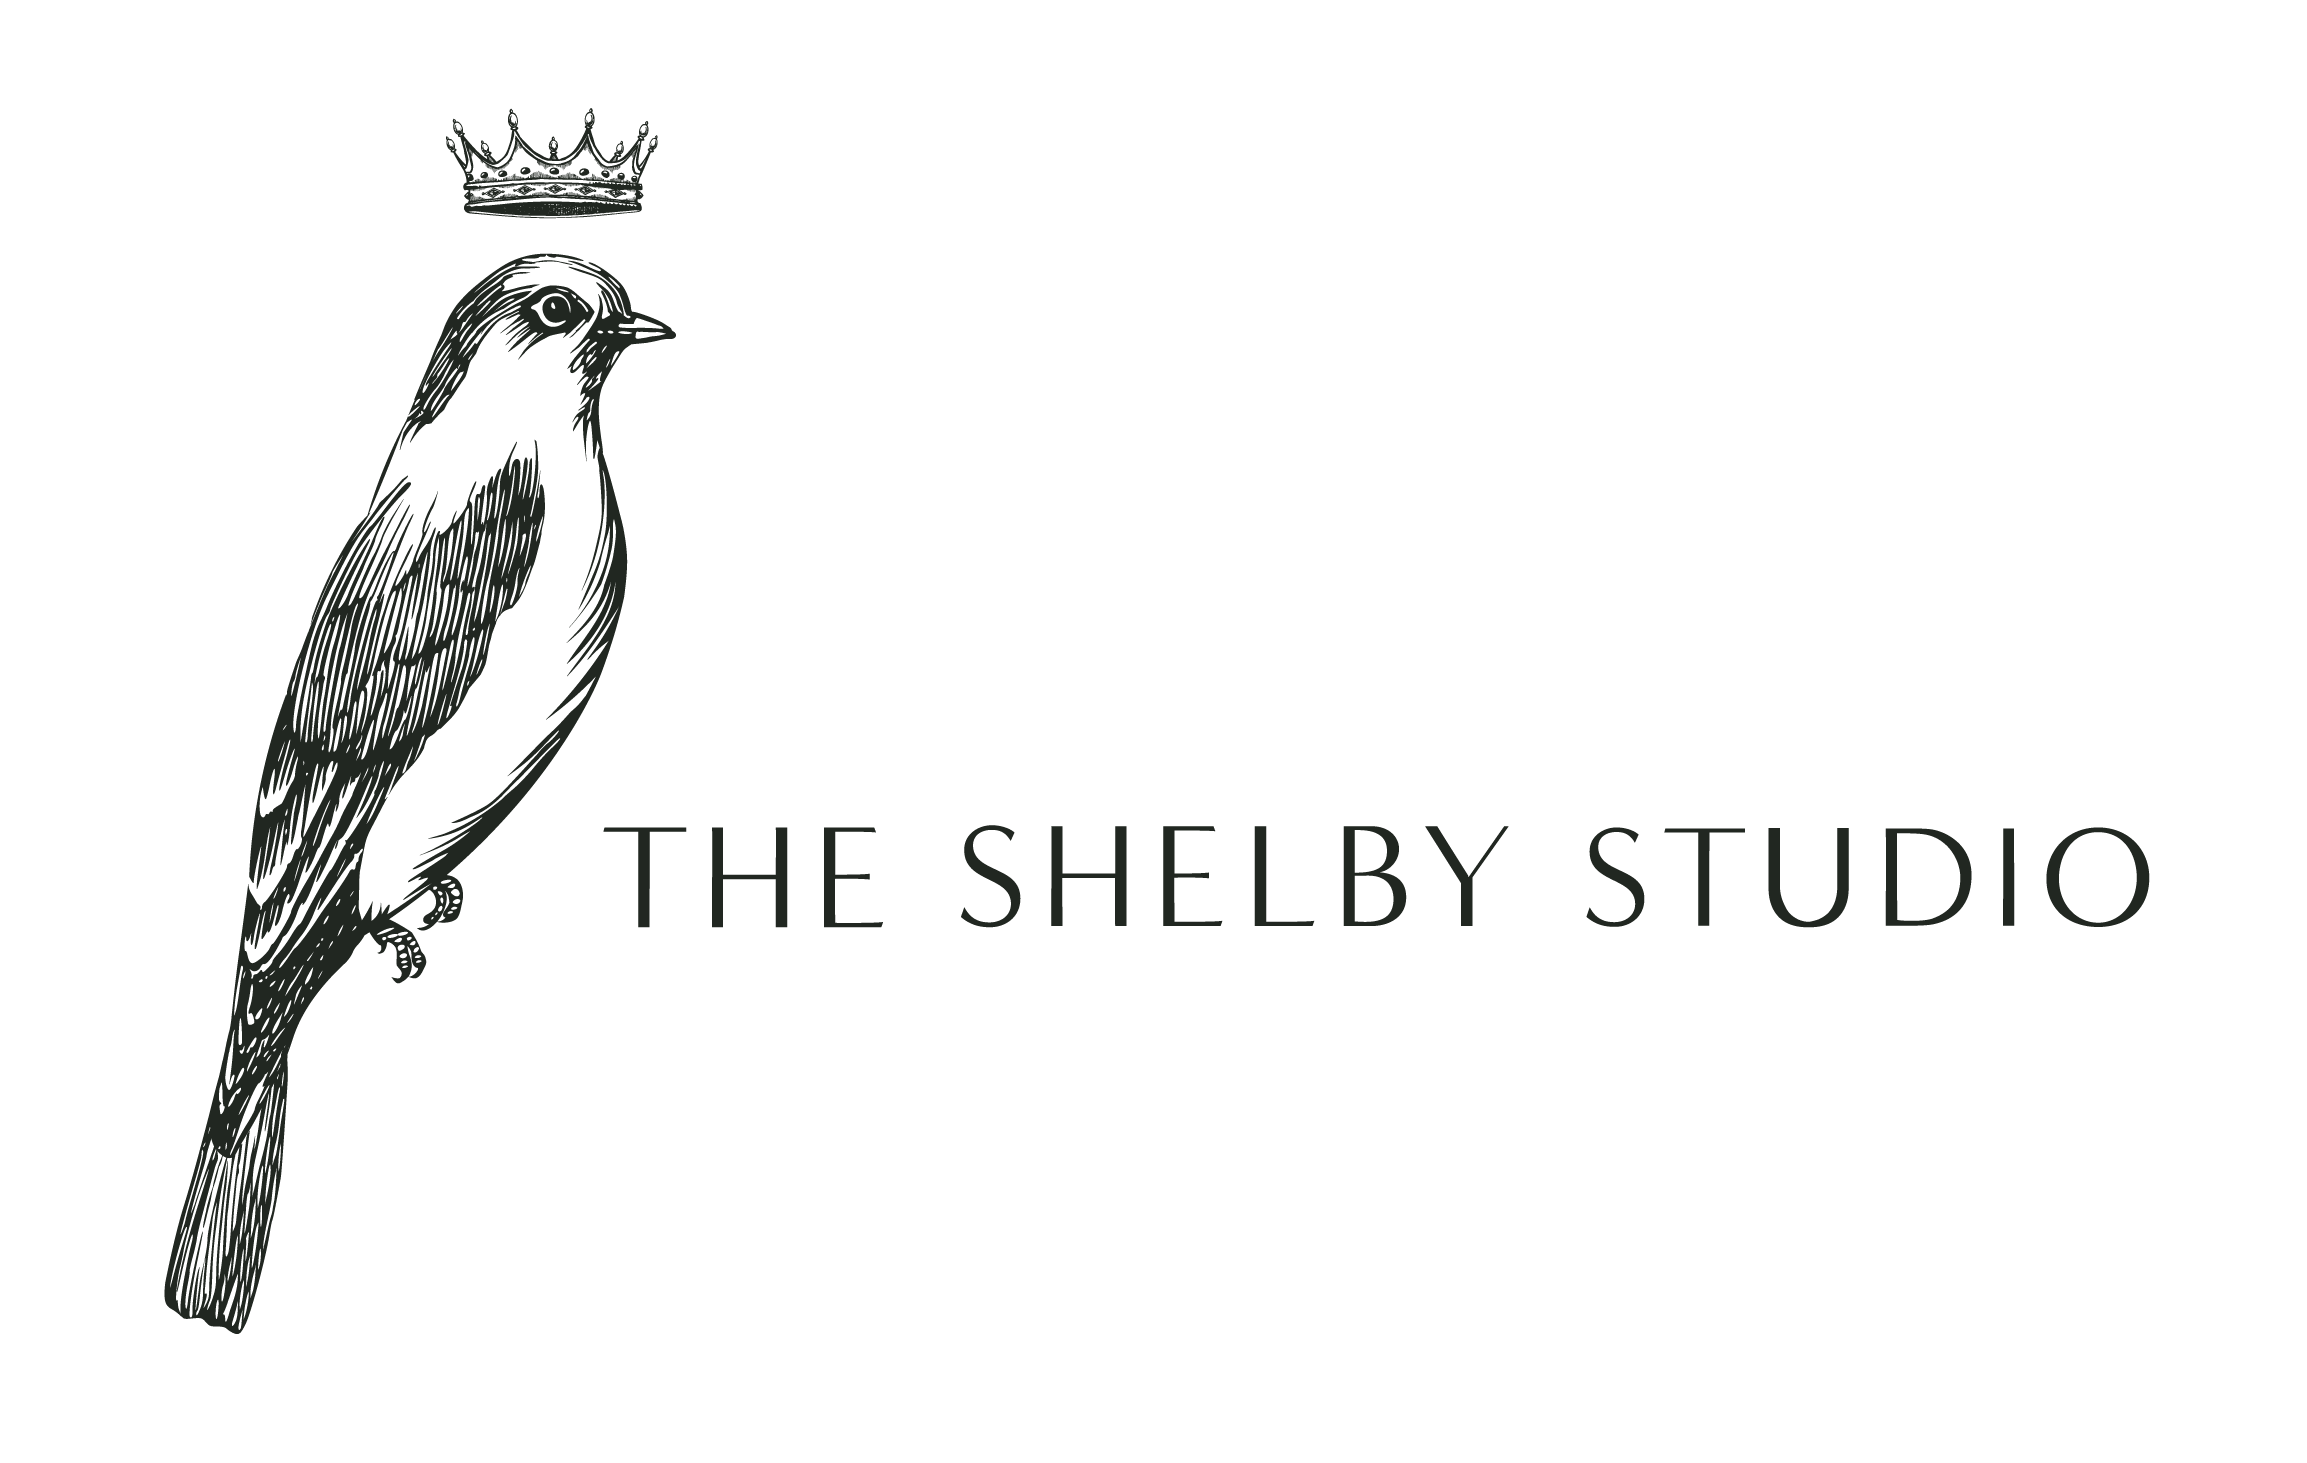 The Shelby Studio